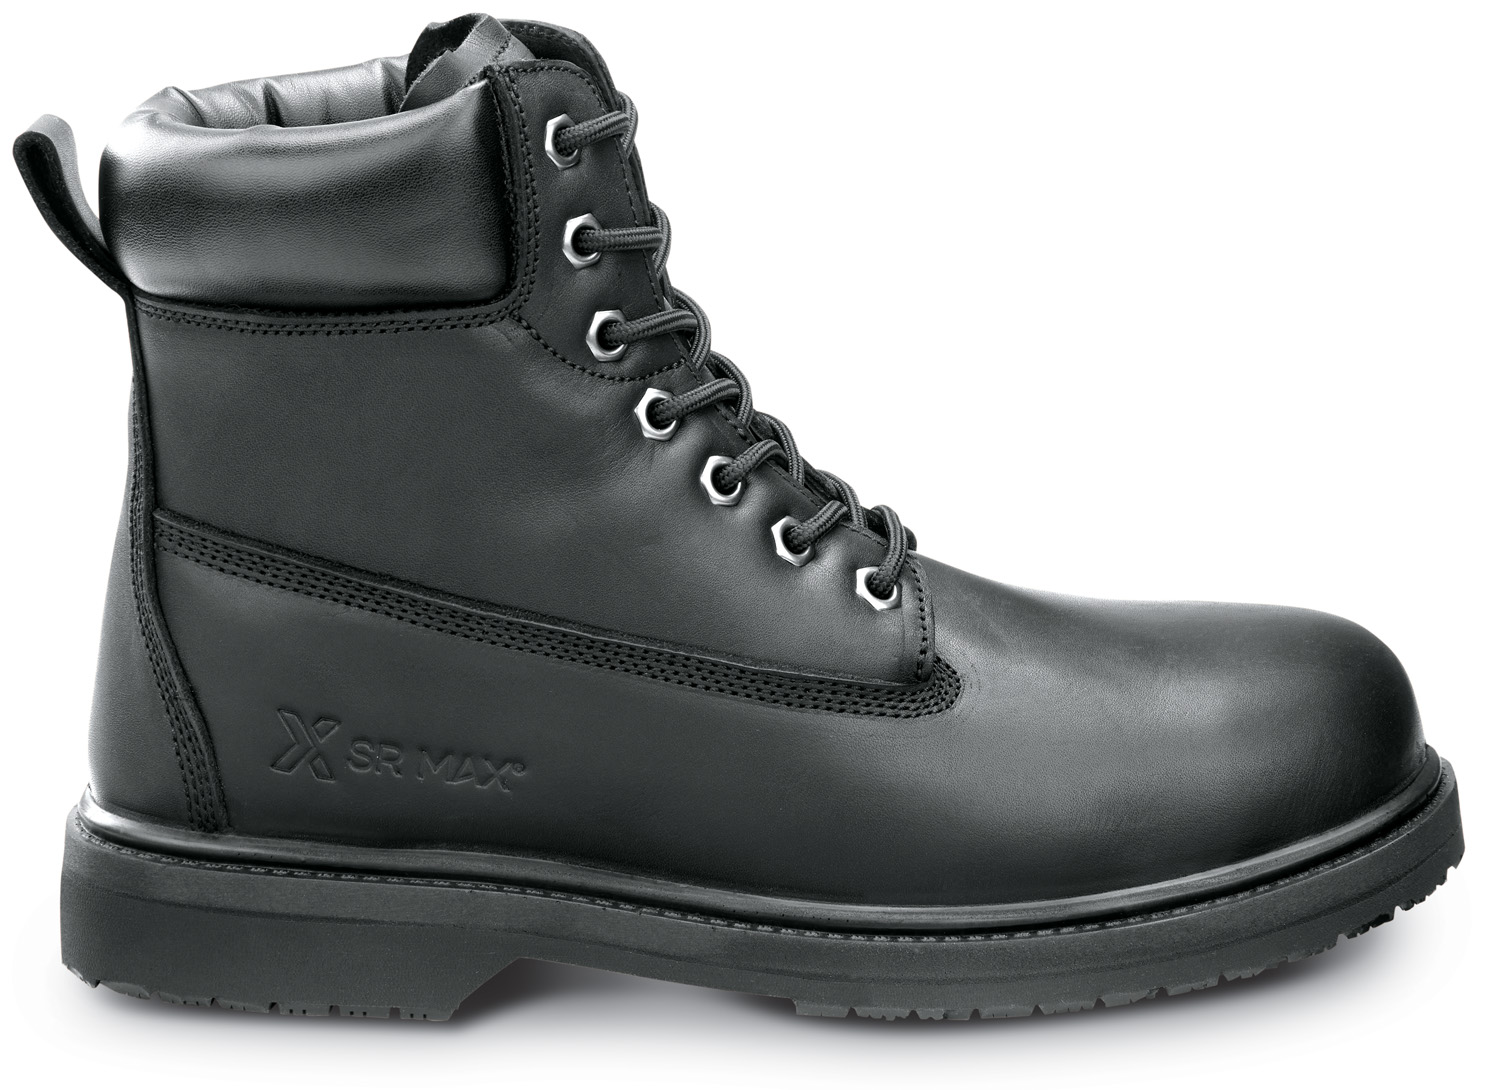 max steel work boots